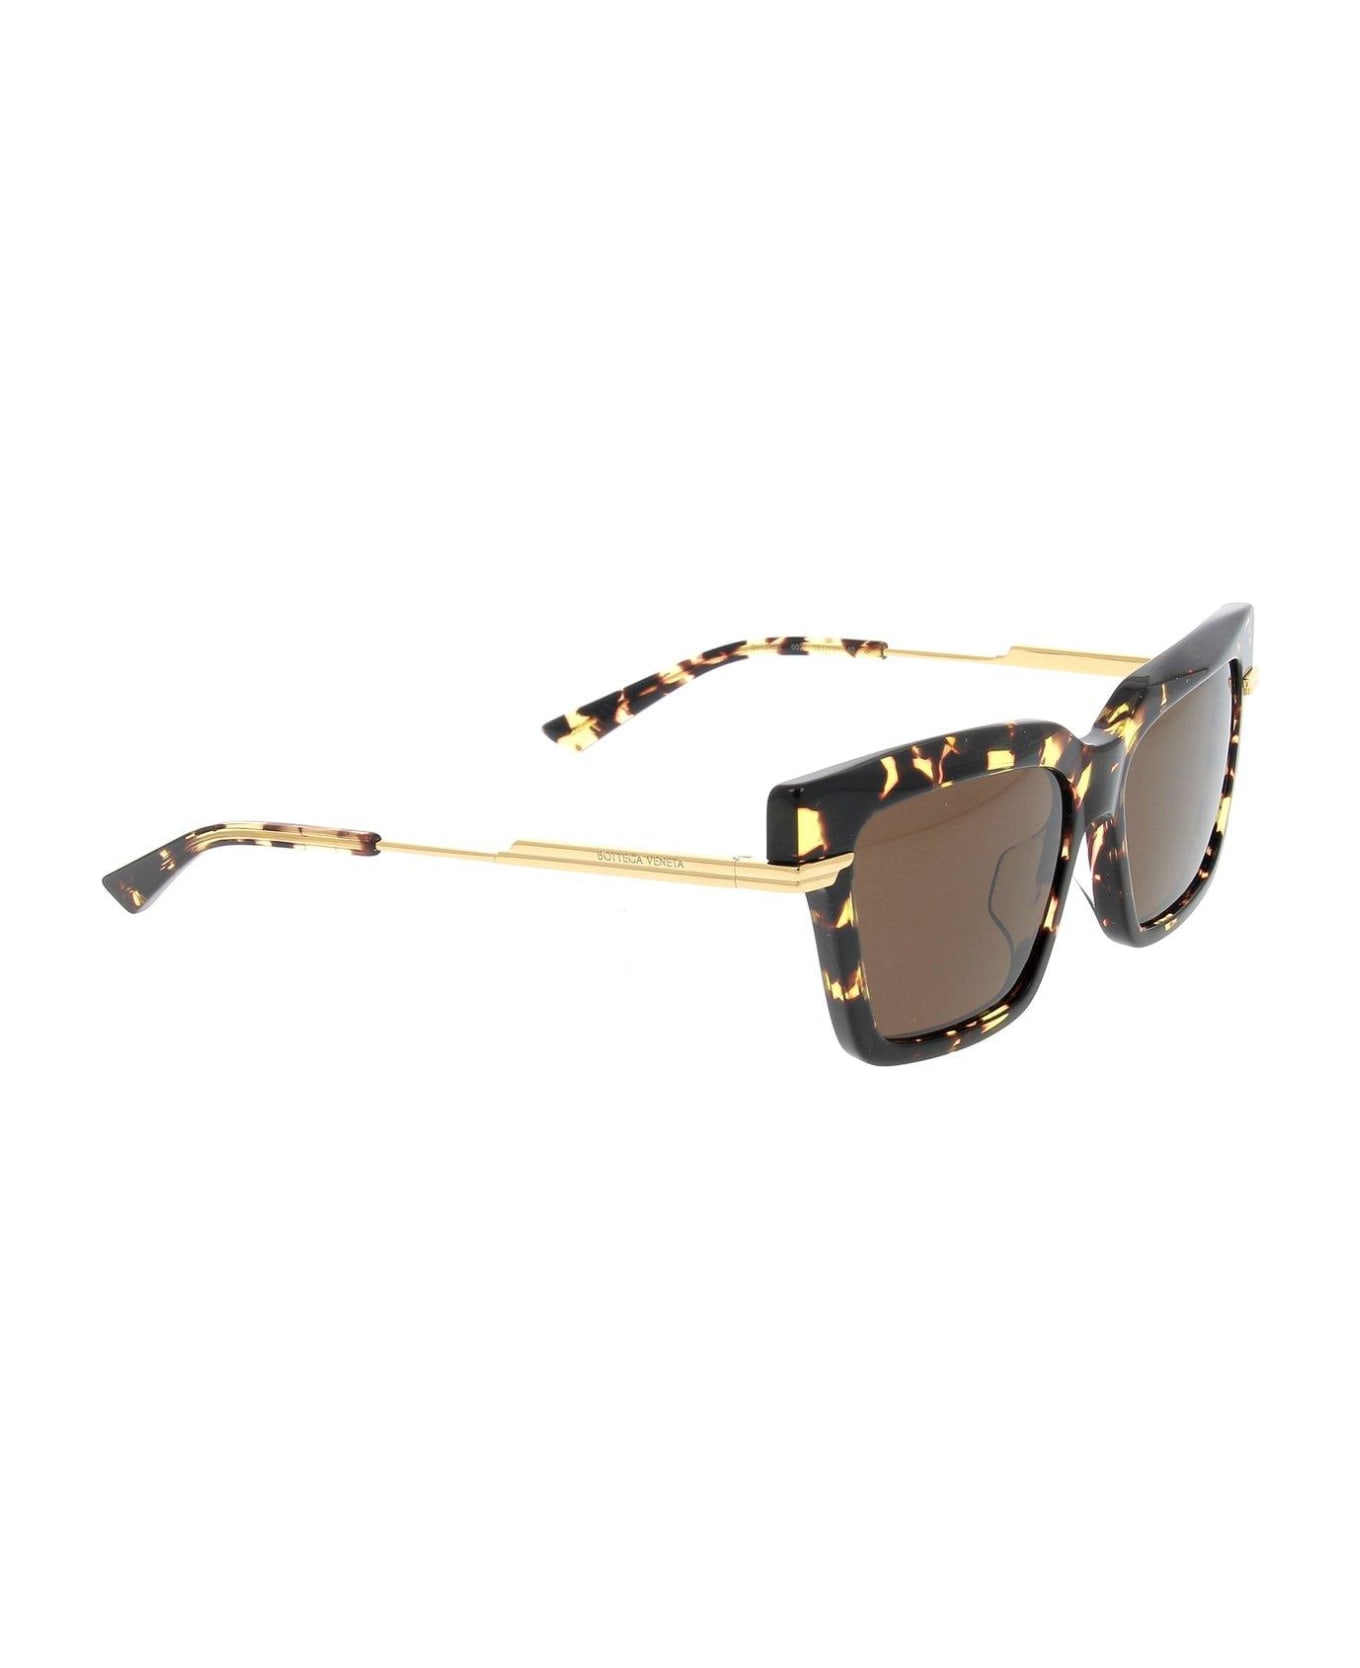 Bottega Veneta Eyewear Cat-eye Frame Sunglasses Sunglasses - 002 HAVANA GOLD BROWN